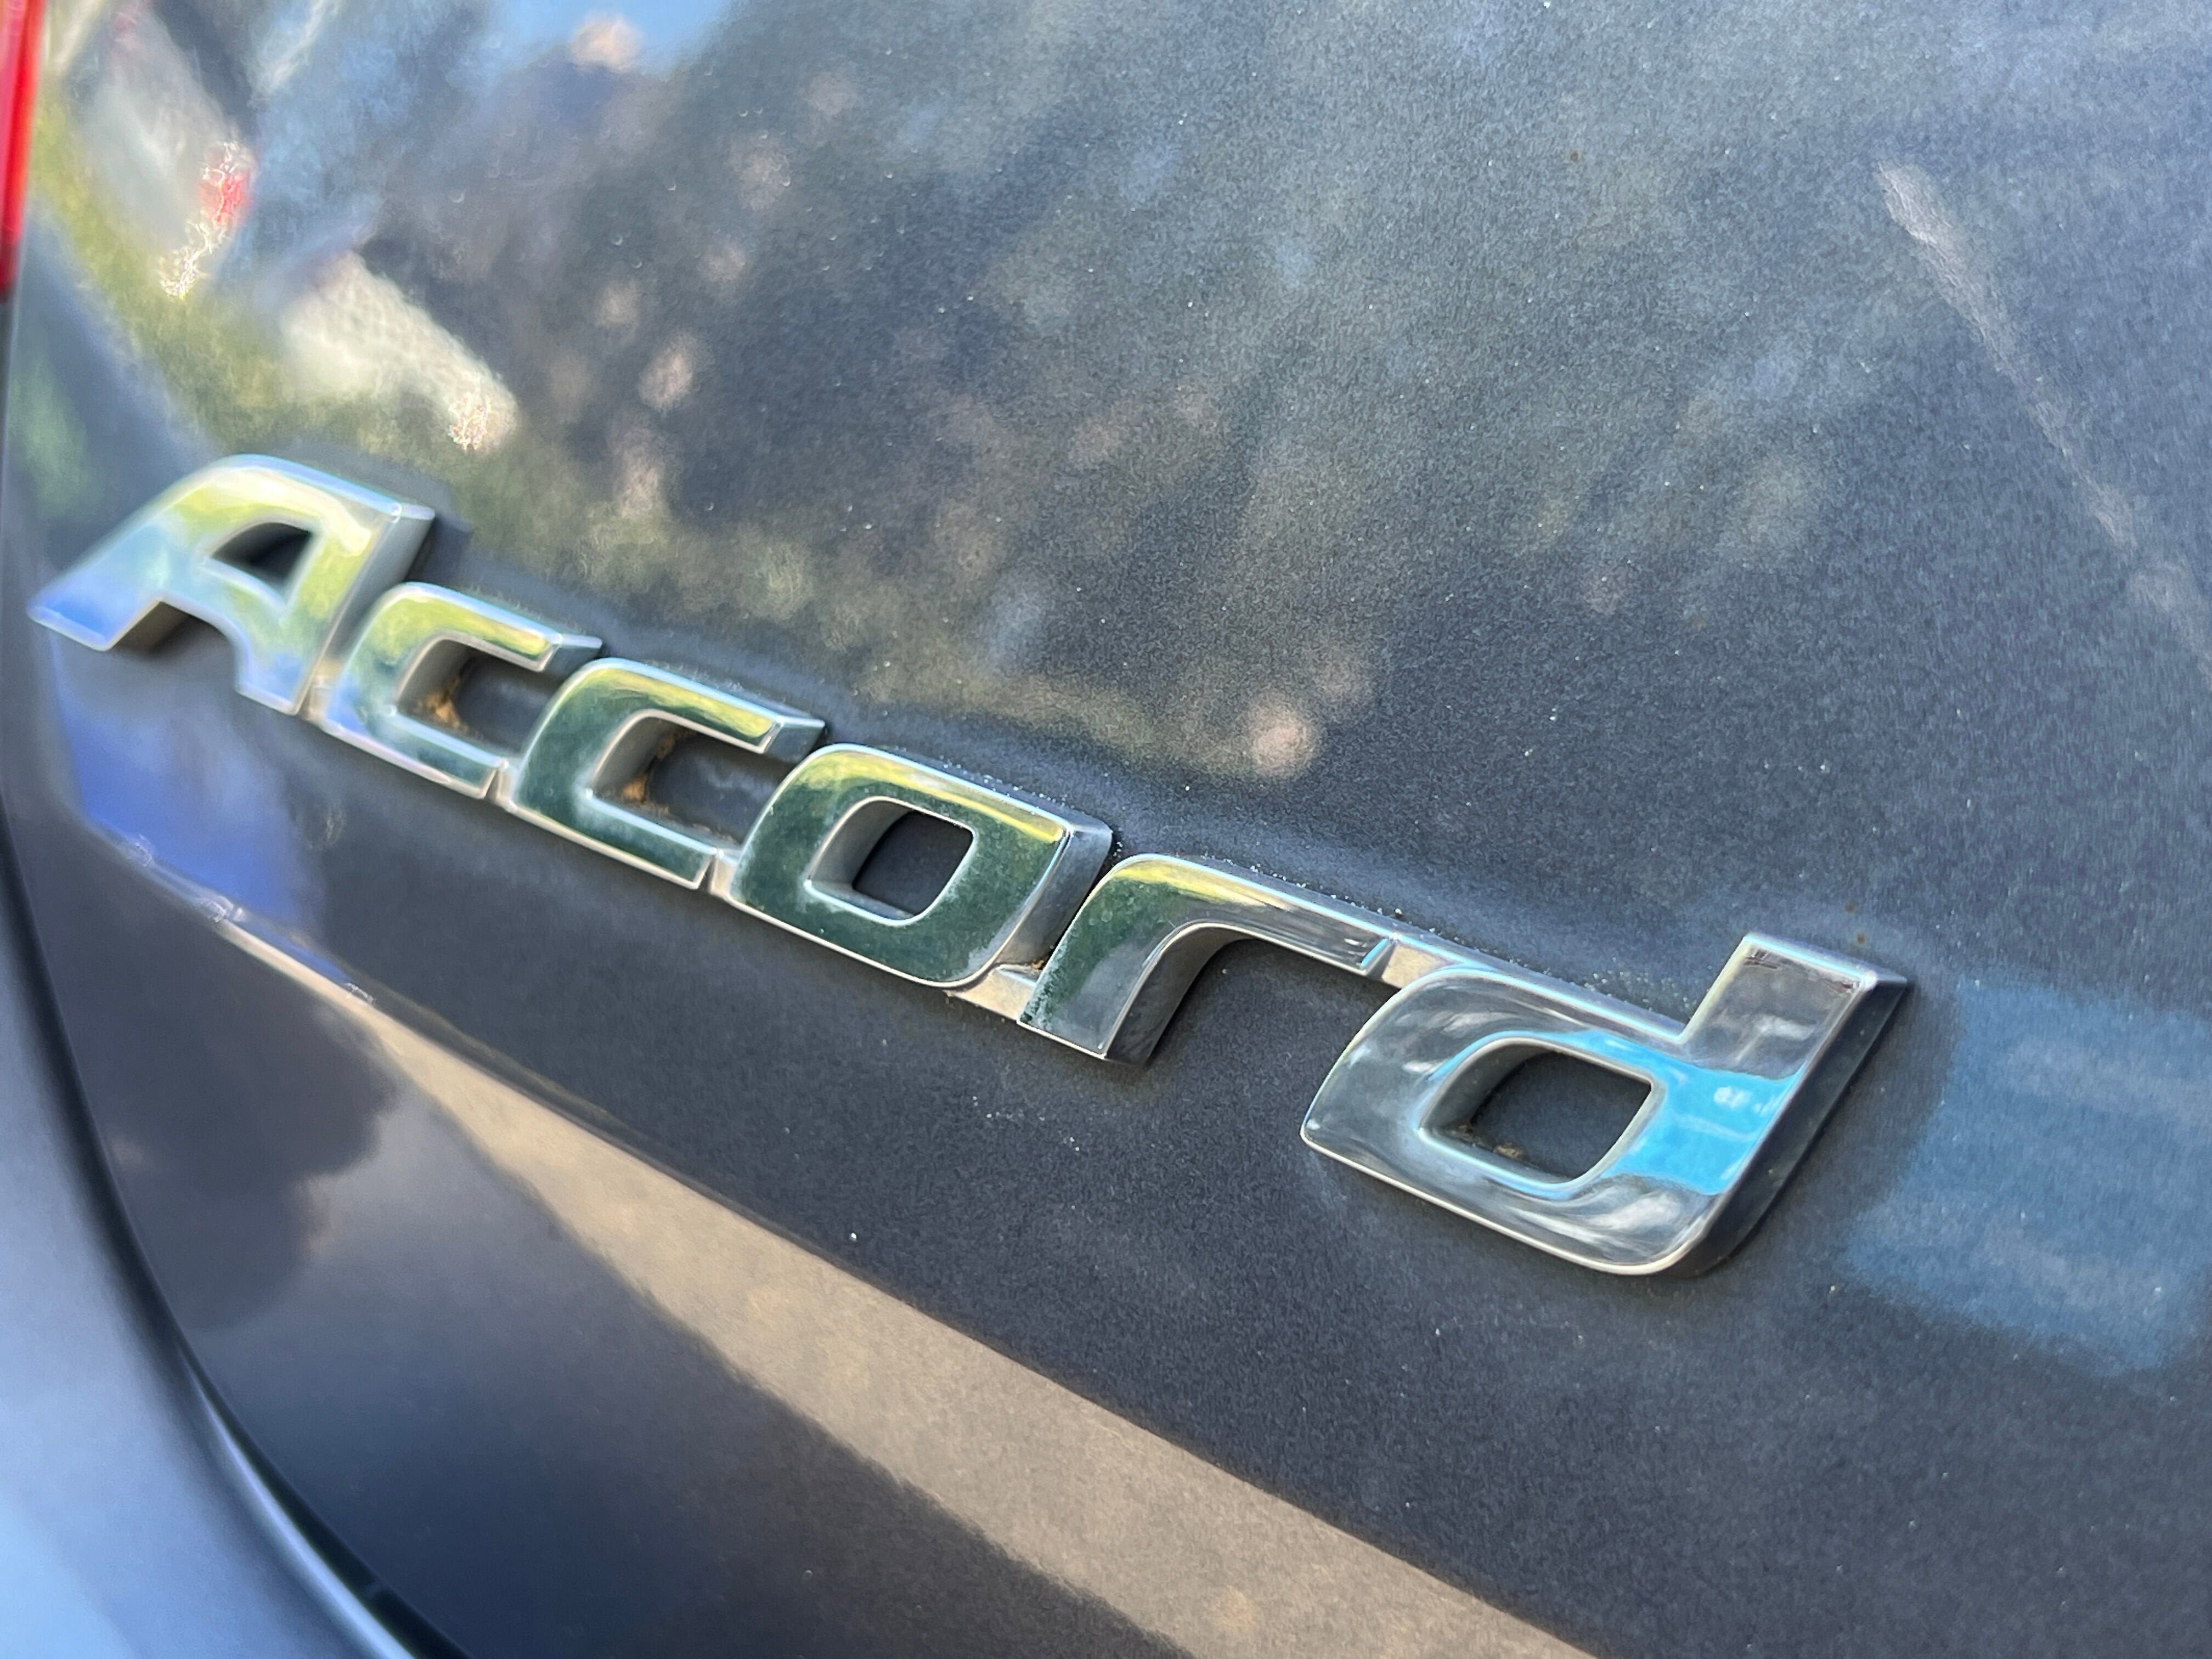 2015 Honda Accord Coupe EX-L